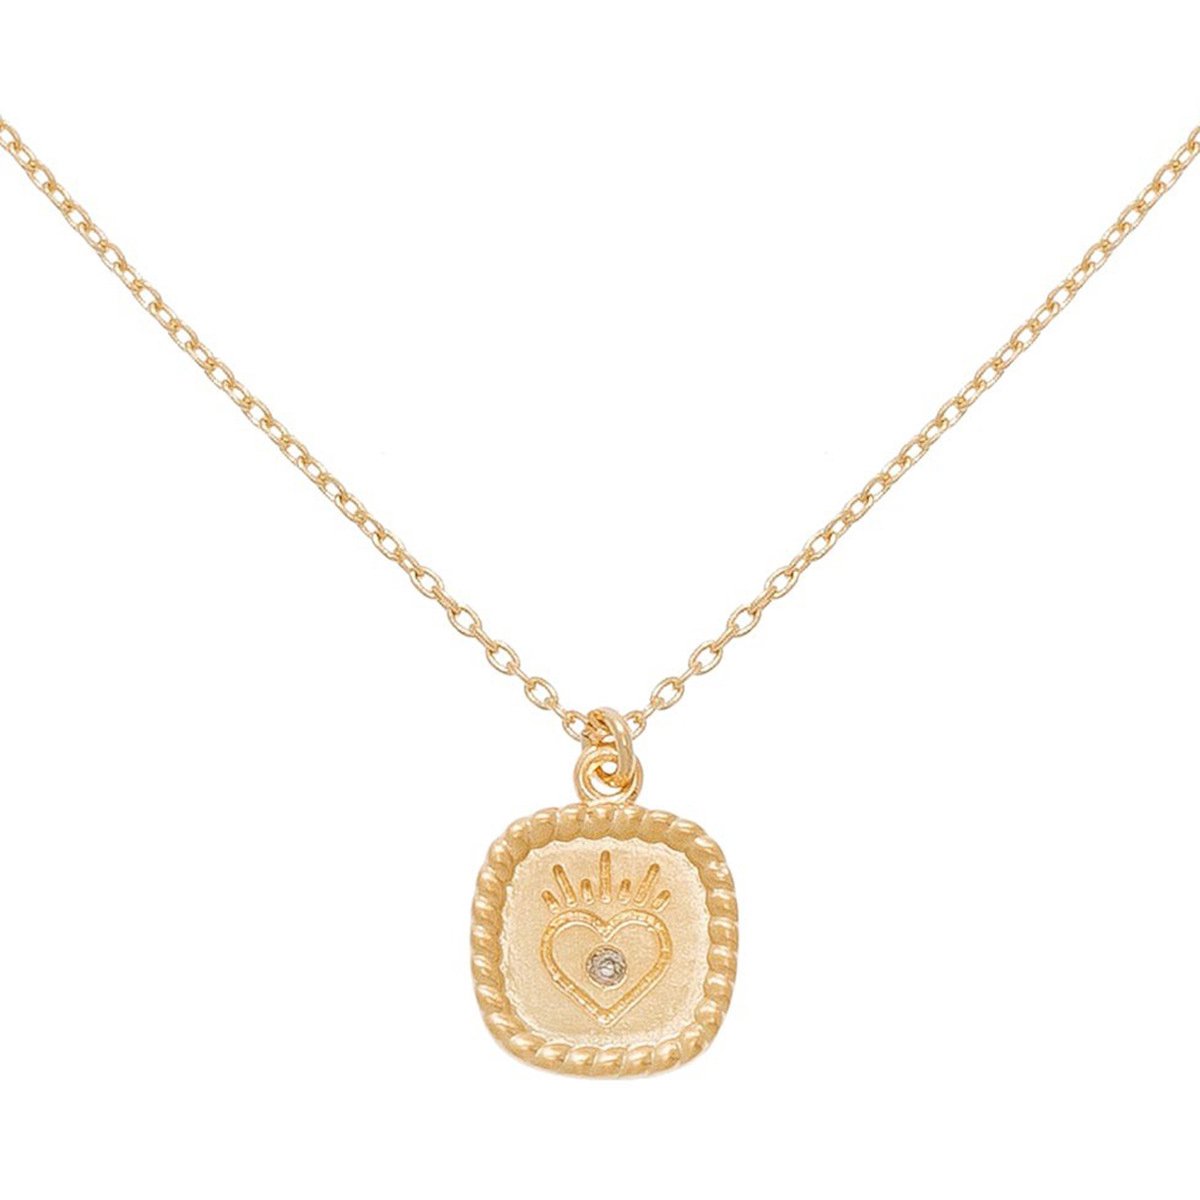 Marama - Ketting Love Gold - halsketting - damesketting - liefde - valentijn - cadeau - moederdag - amulet met hartje